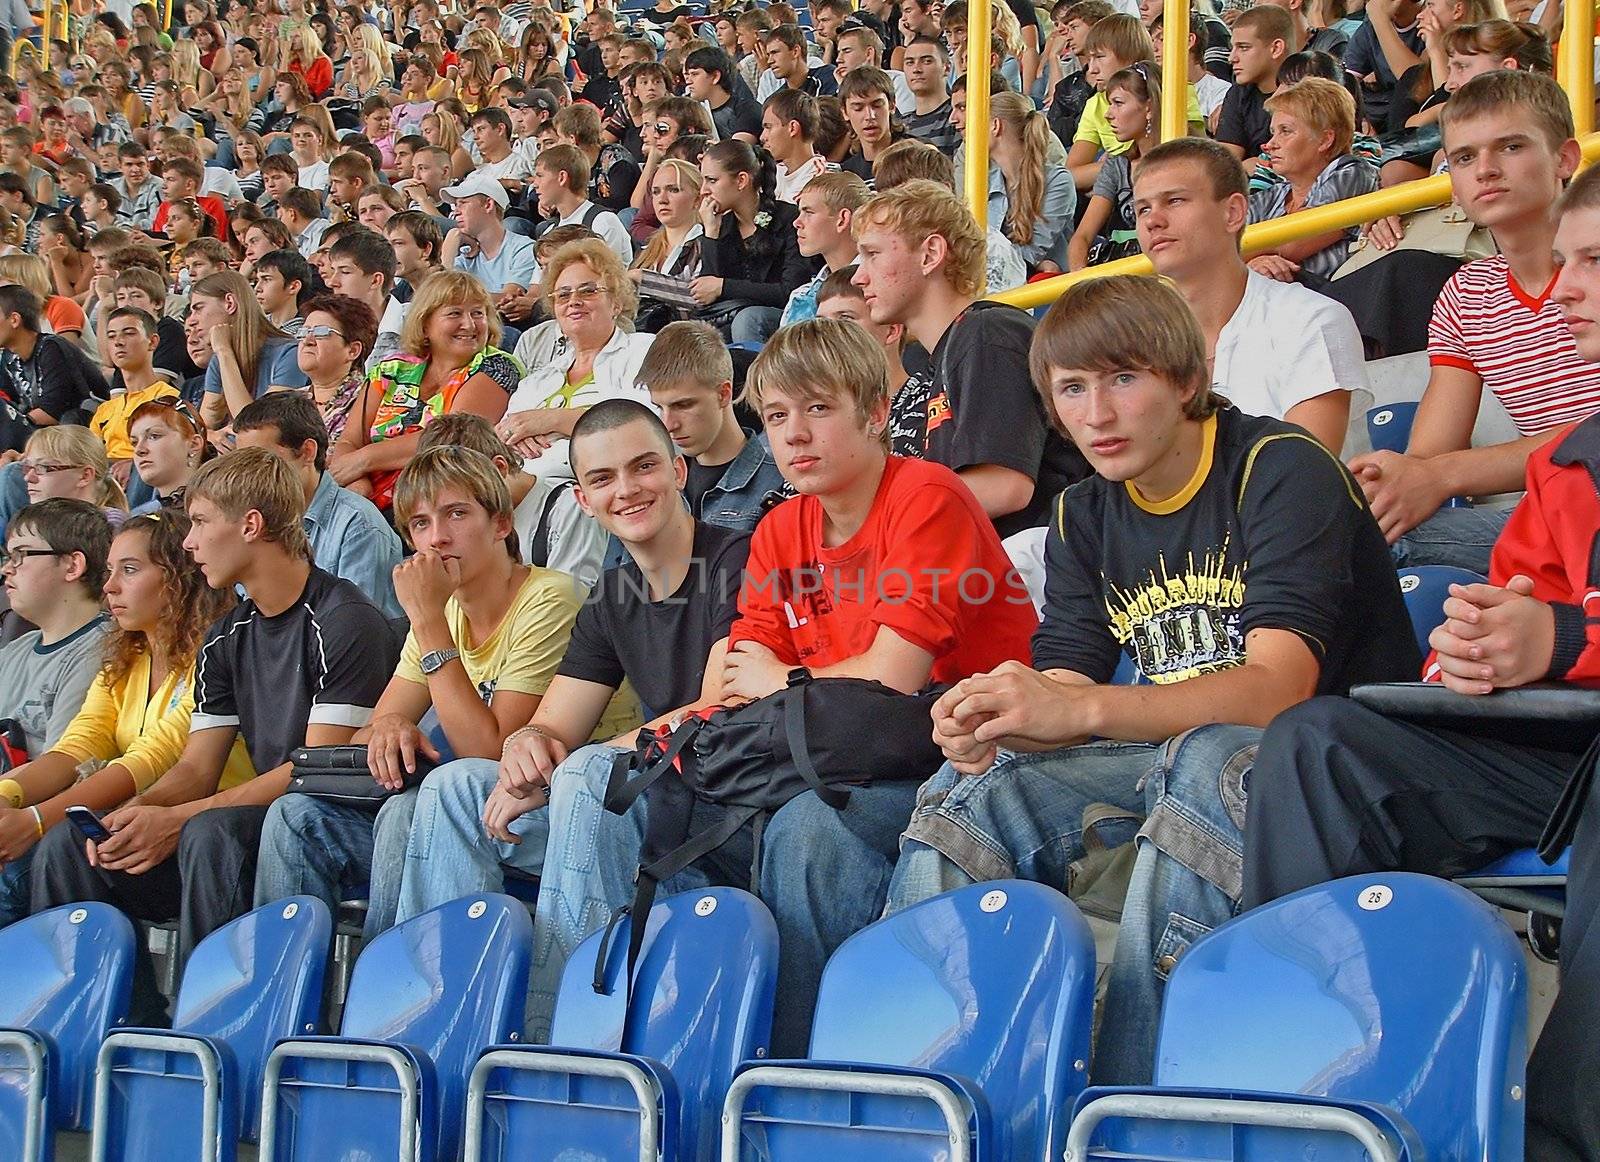 spectators in stadium by myyayko